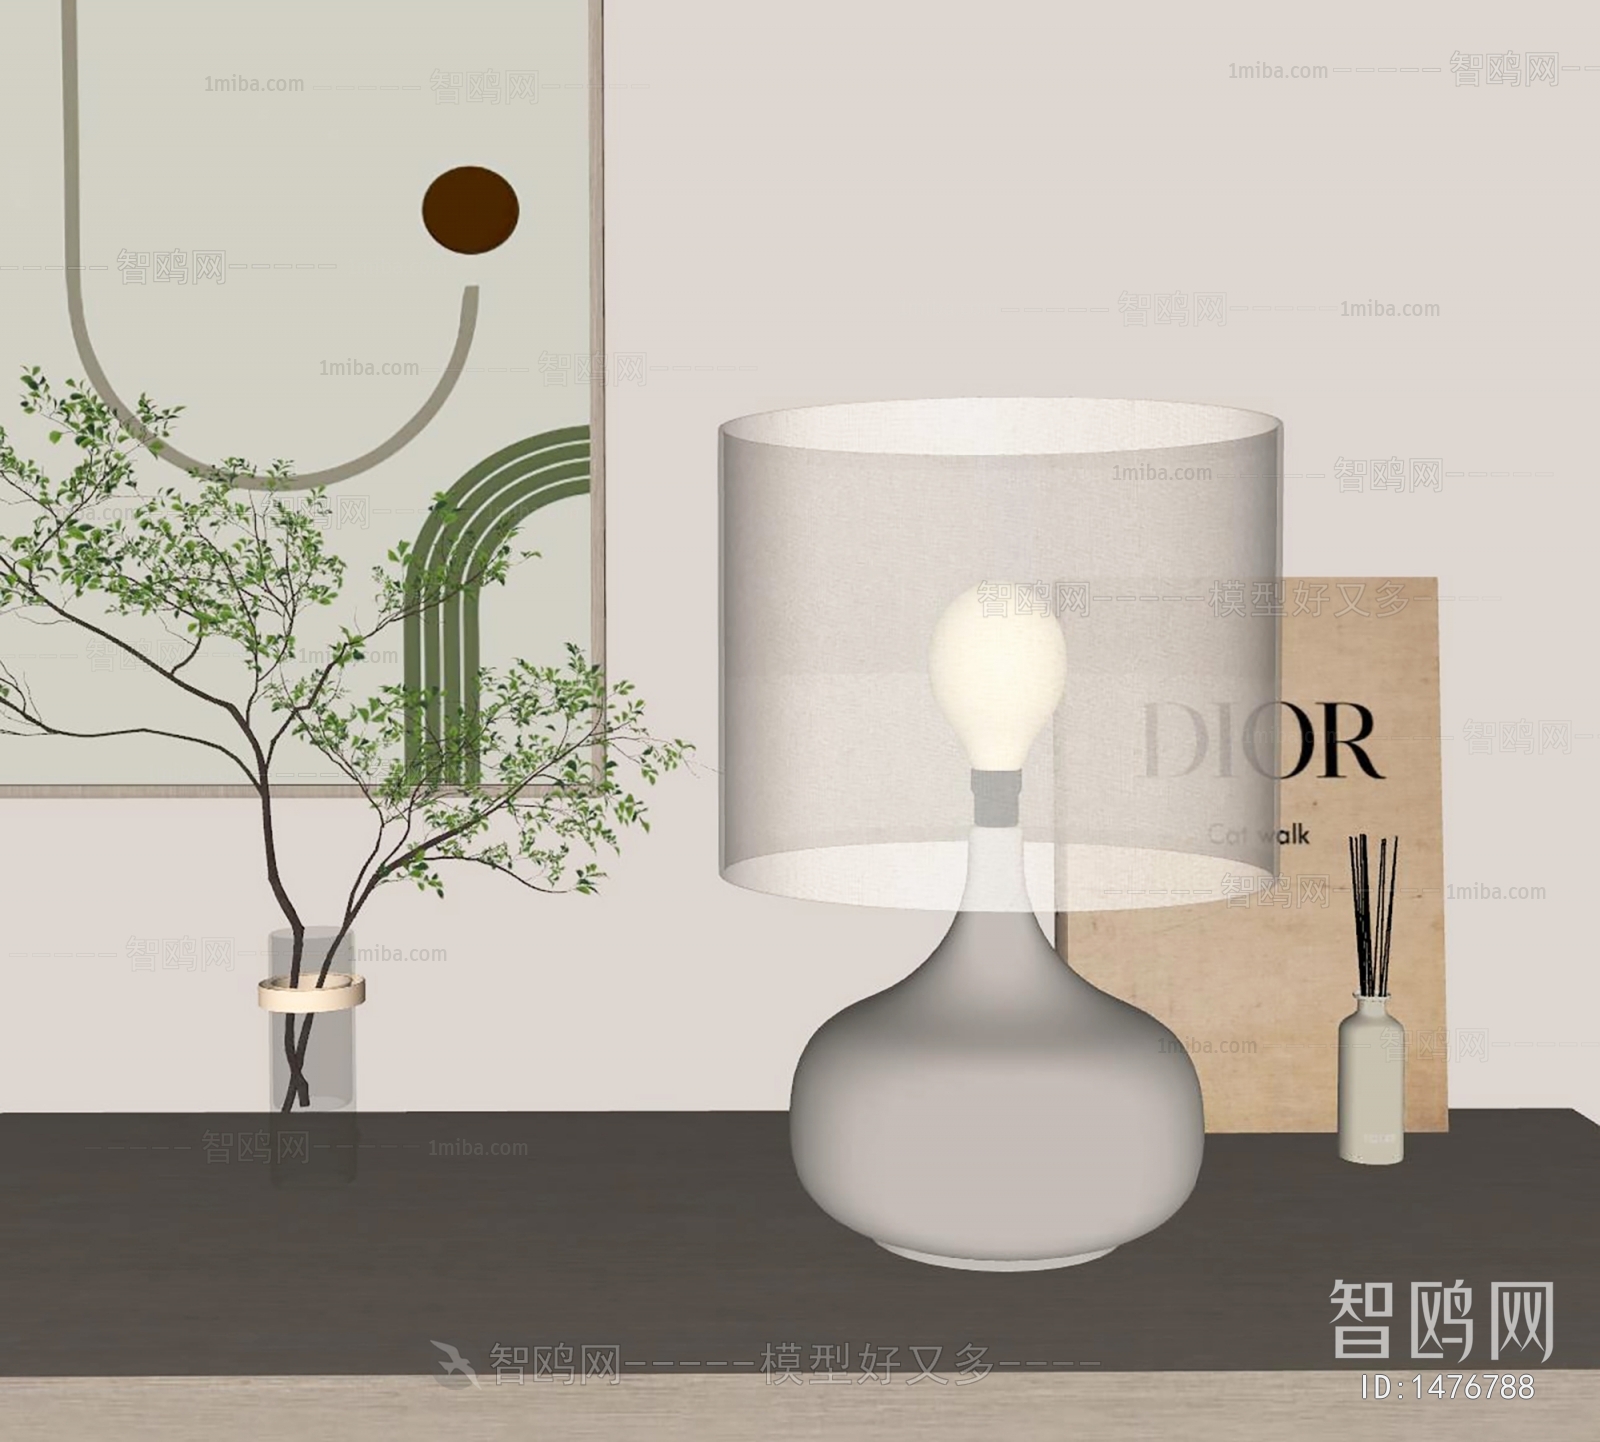 Modern Wabi-sabi Style Table Lamp